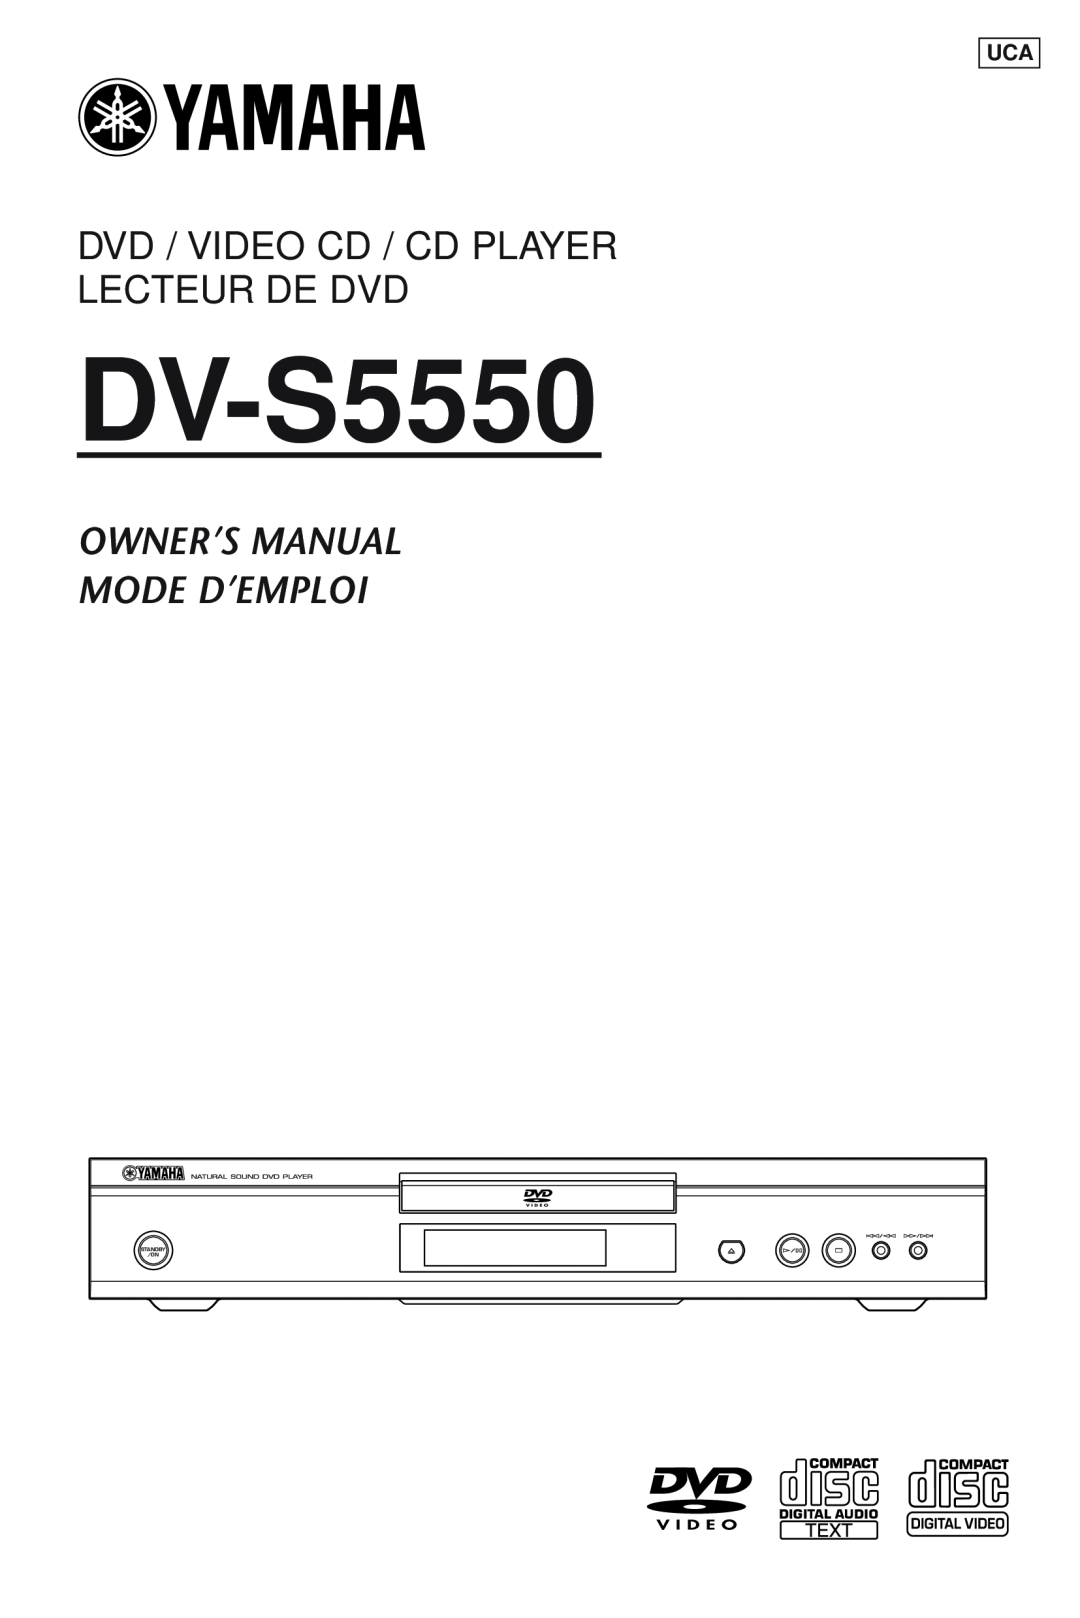 Yamaha DV-S5550 owner manual Dvd / Video Cd / Cd Player Lecteur De Dvd, Standby On 